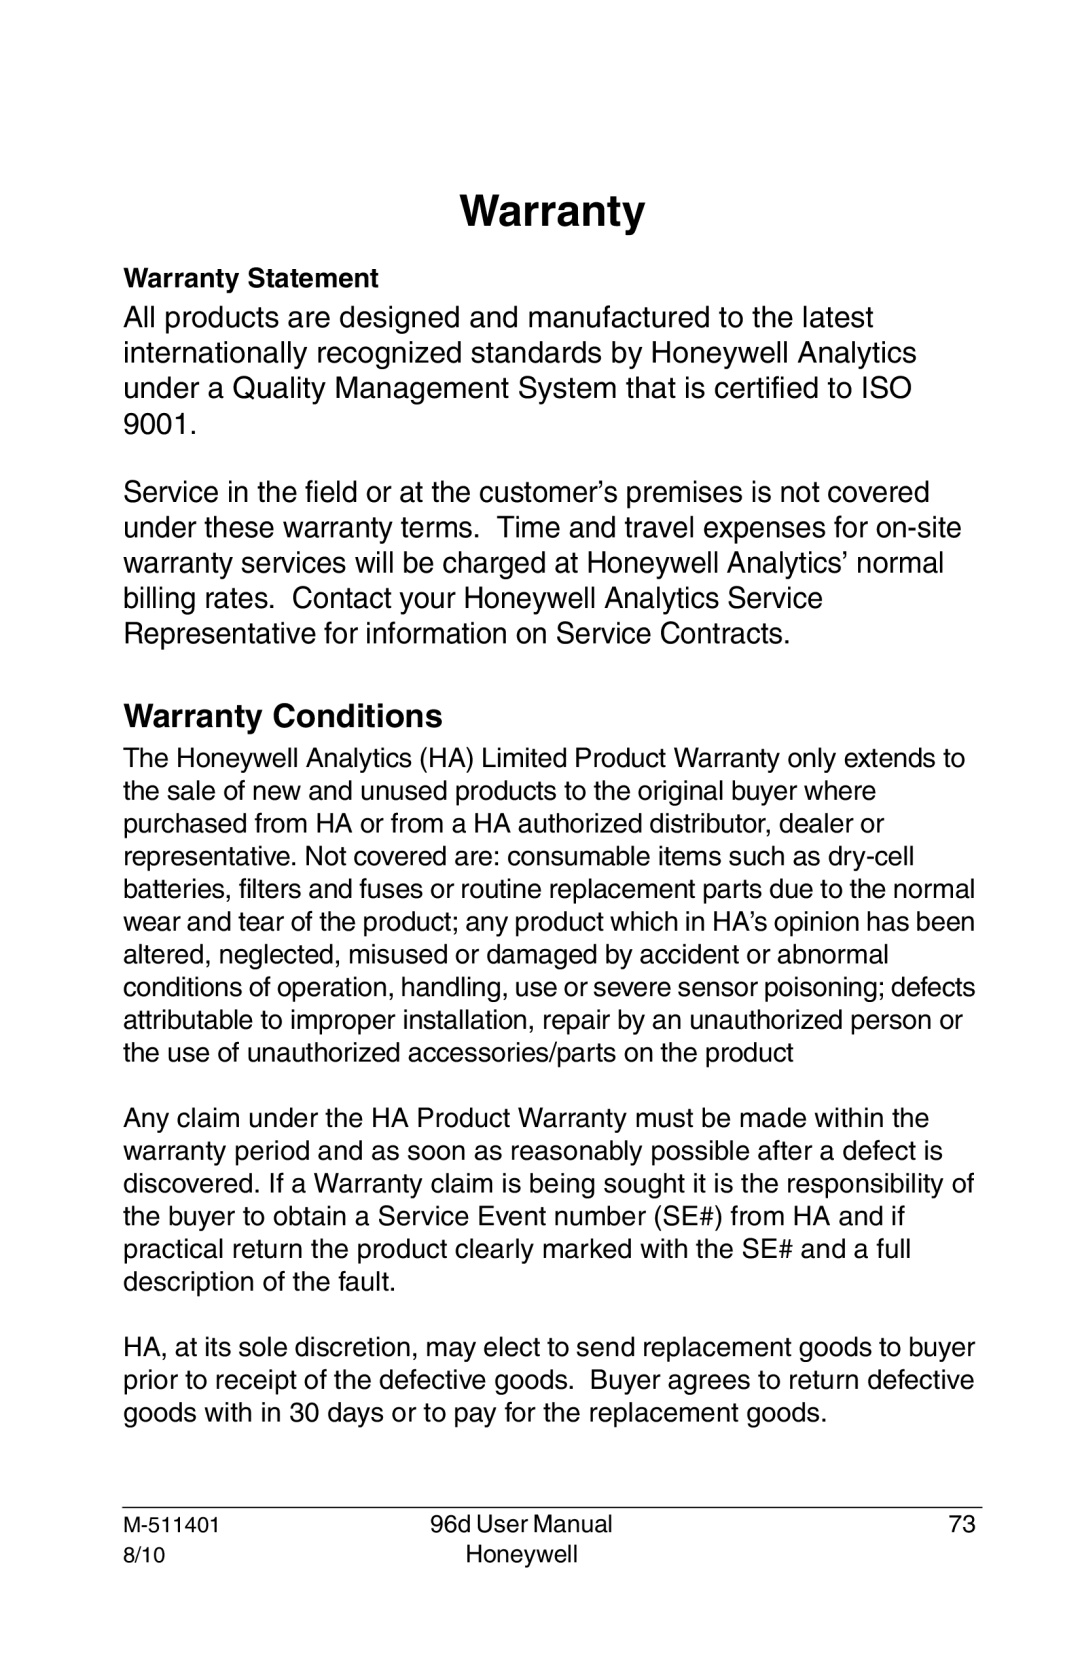 Honeywell 96D user manual Warranty Conditions 